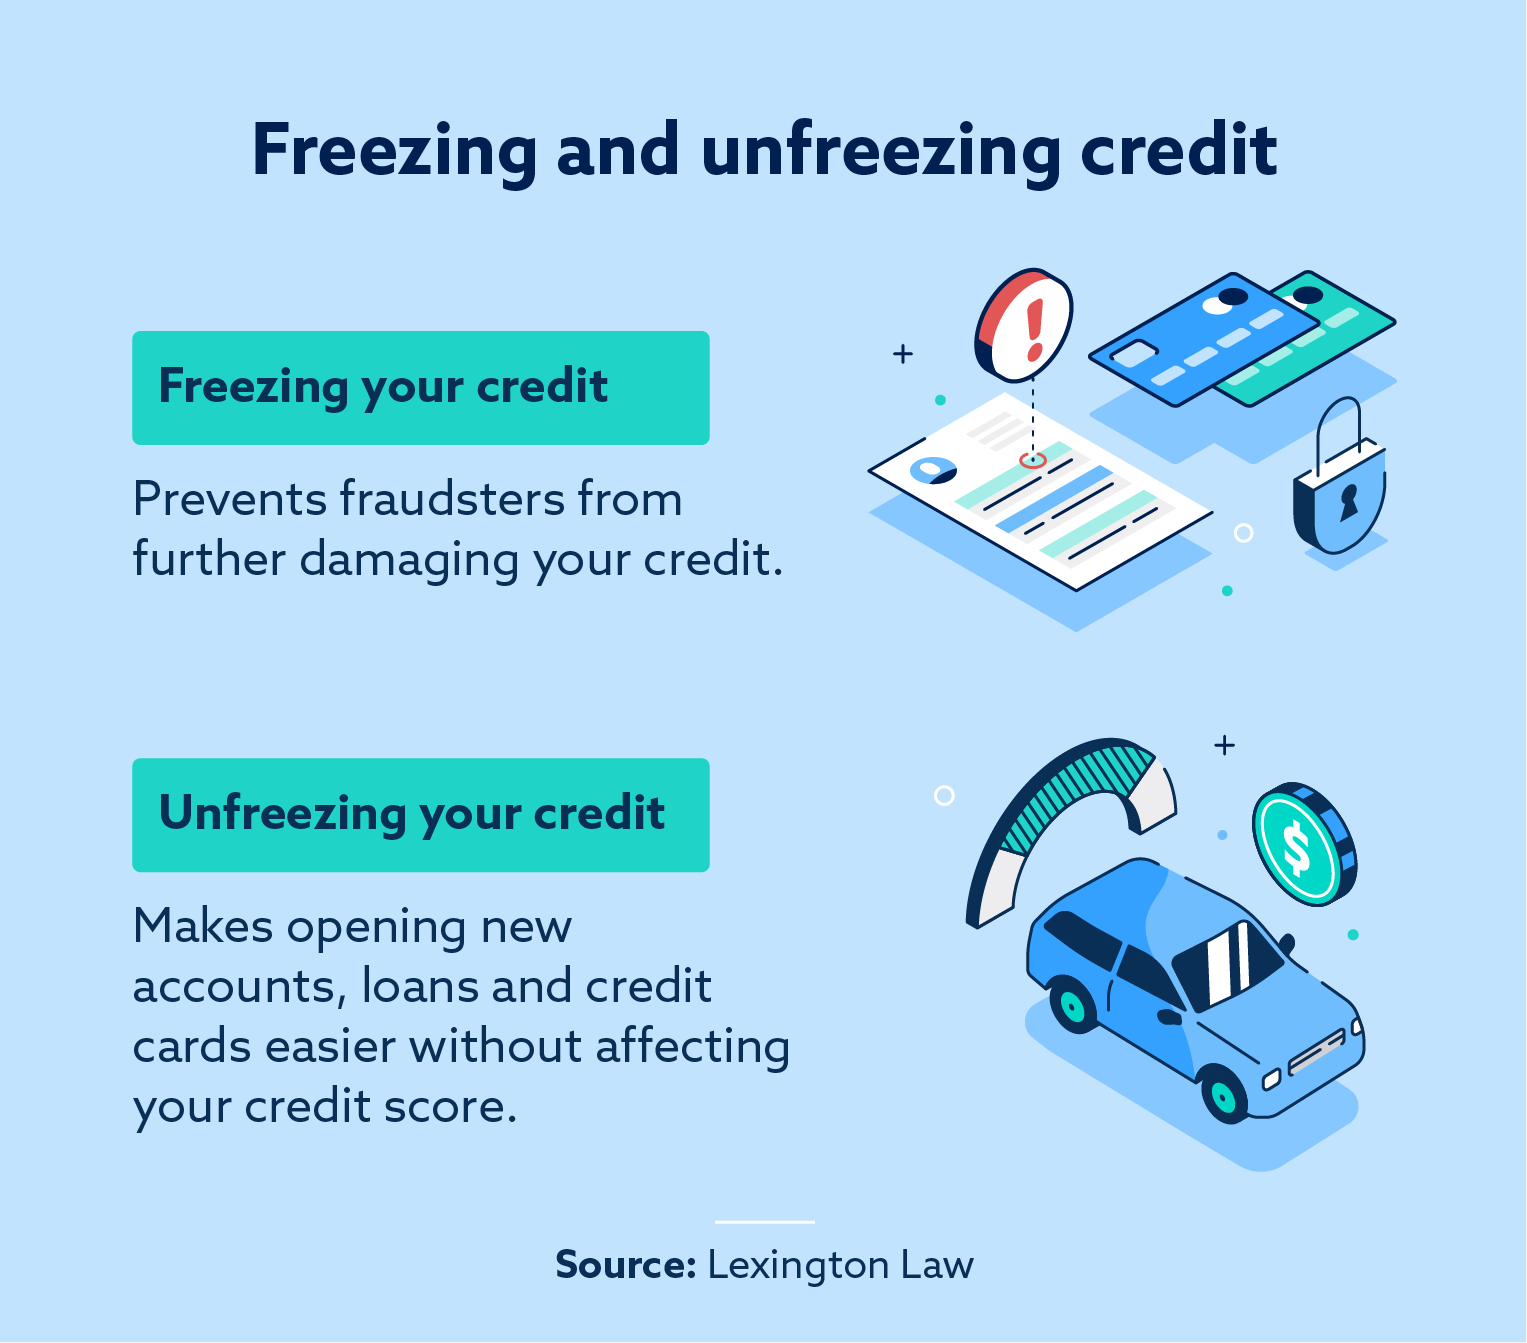 Few Consumers Take Advantage of Credit Freezing